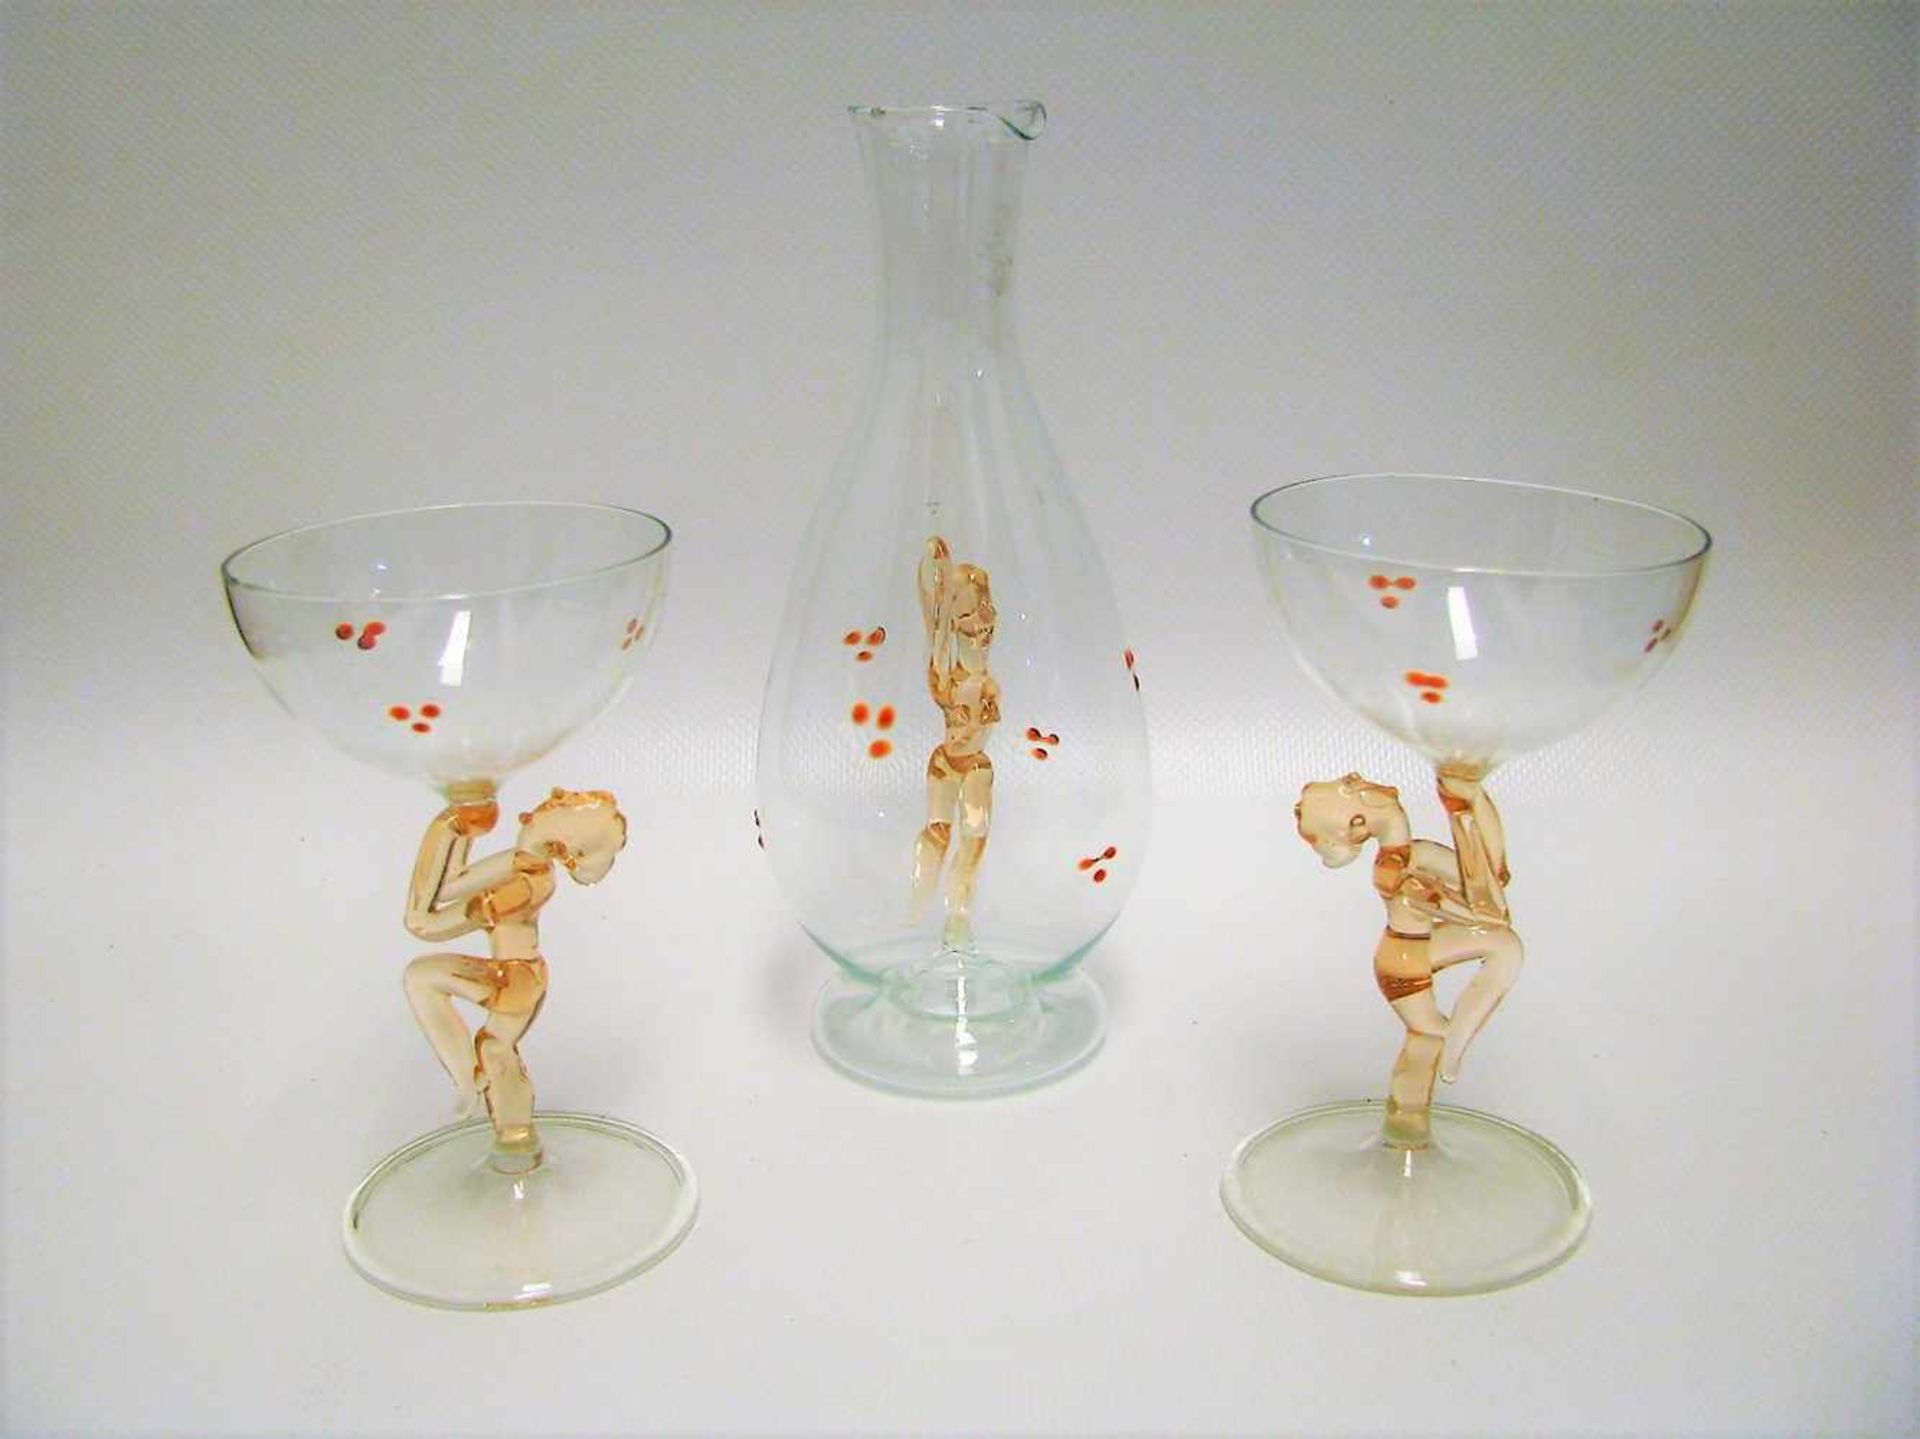 3 teiliges Glasset, Lauscha, Bimini, um 1930, Karaffe mit 2 Likörgläsern, farbloses Glas, figurale